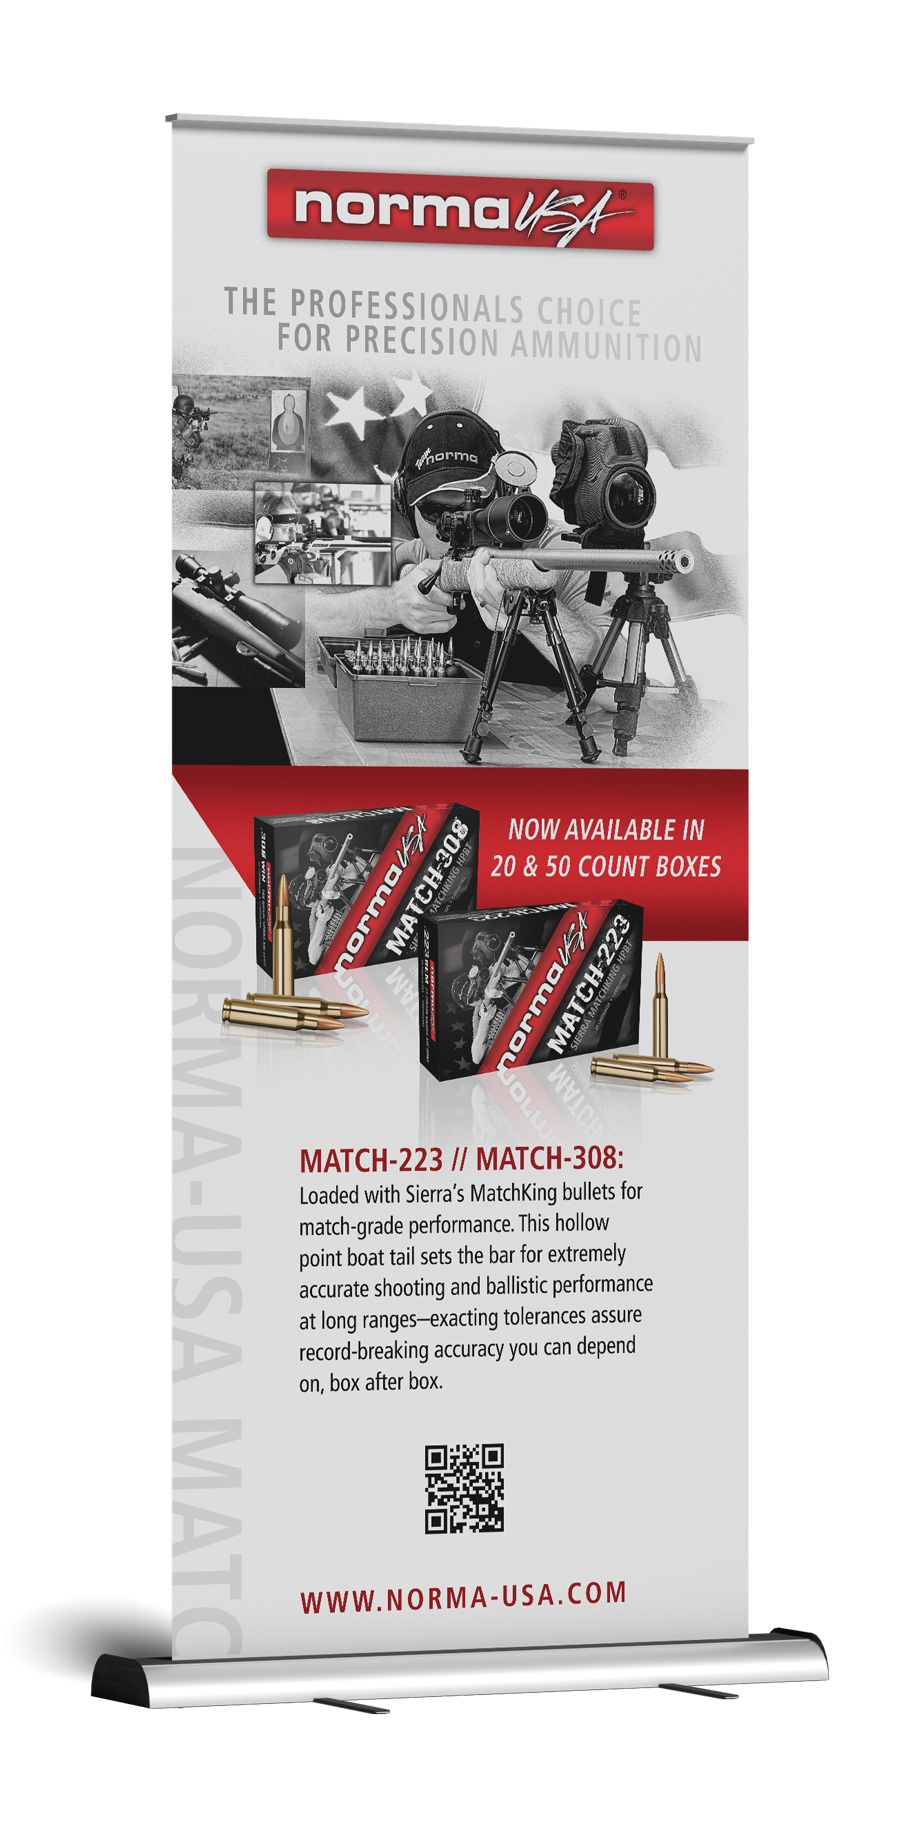 Norma USA Ammunition Match Ammo - Pop Up Banner Design & Print Production